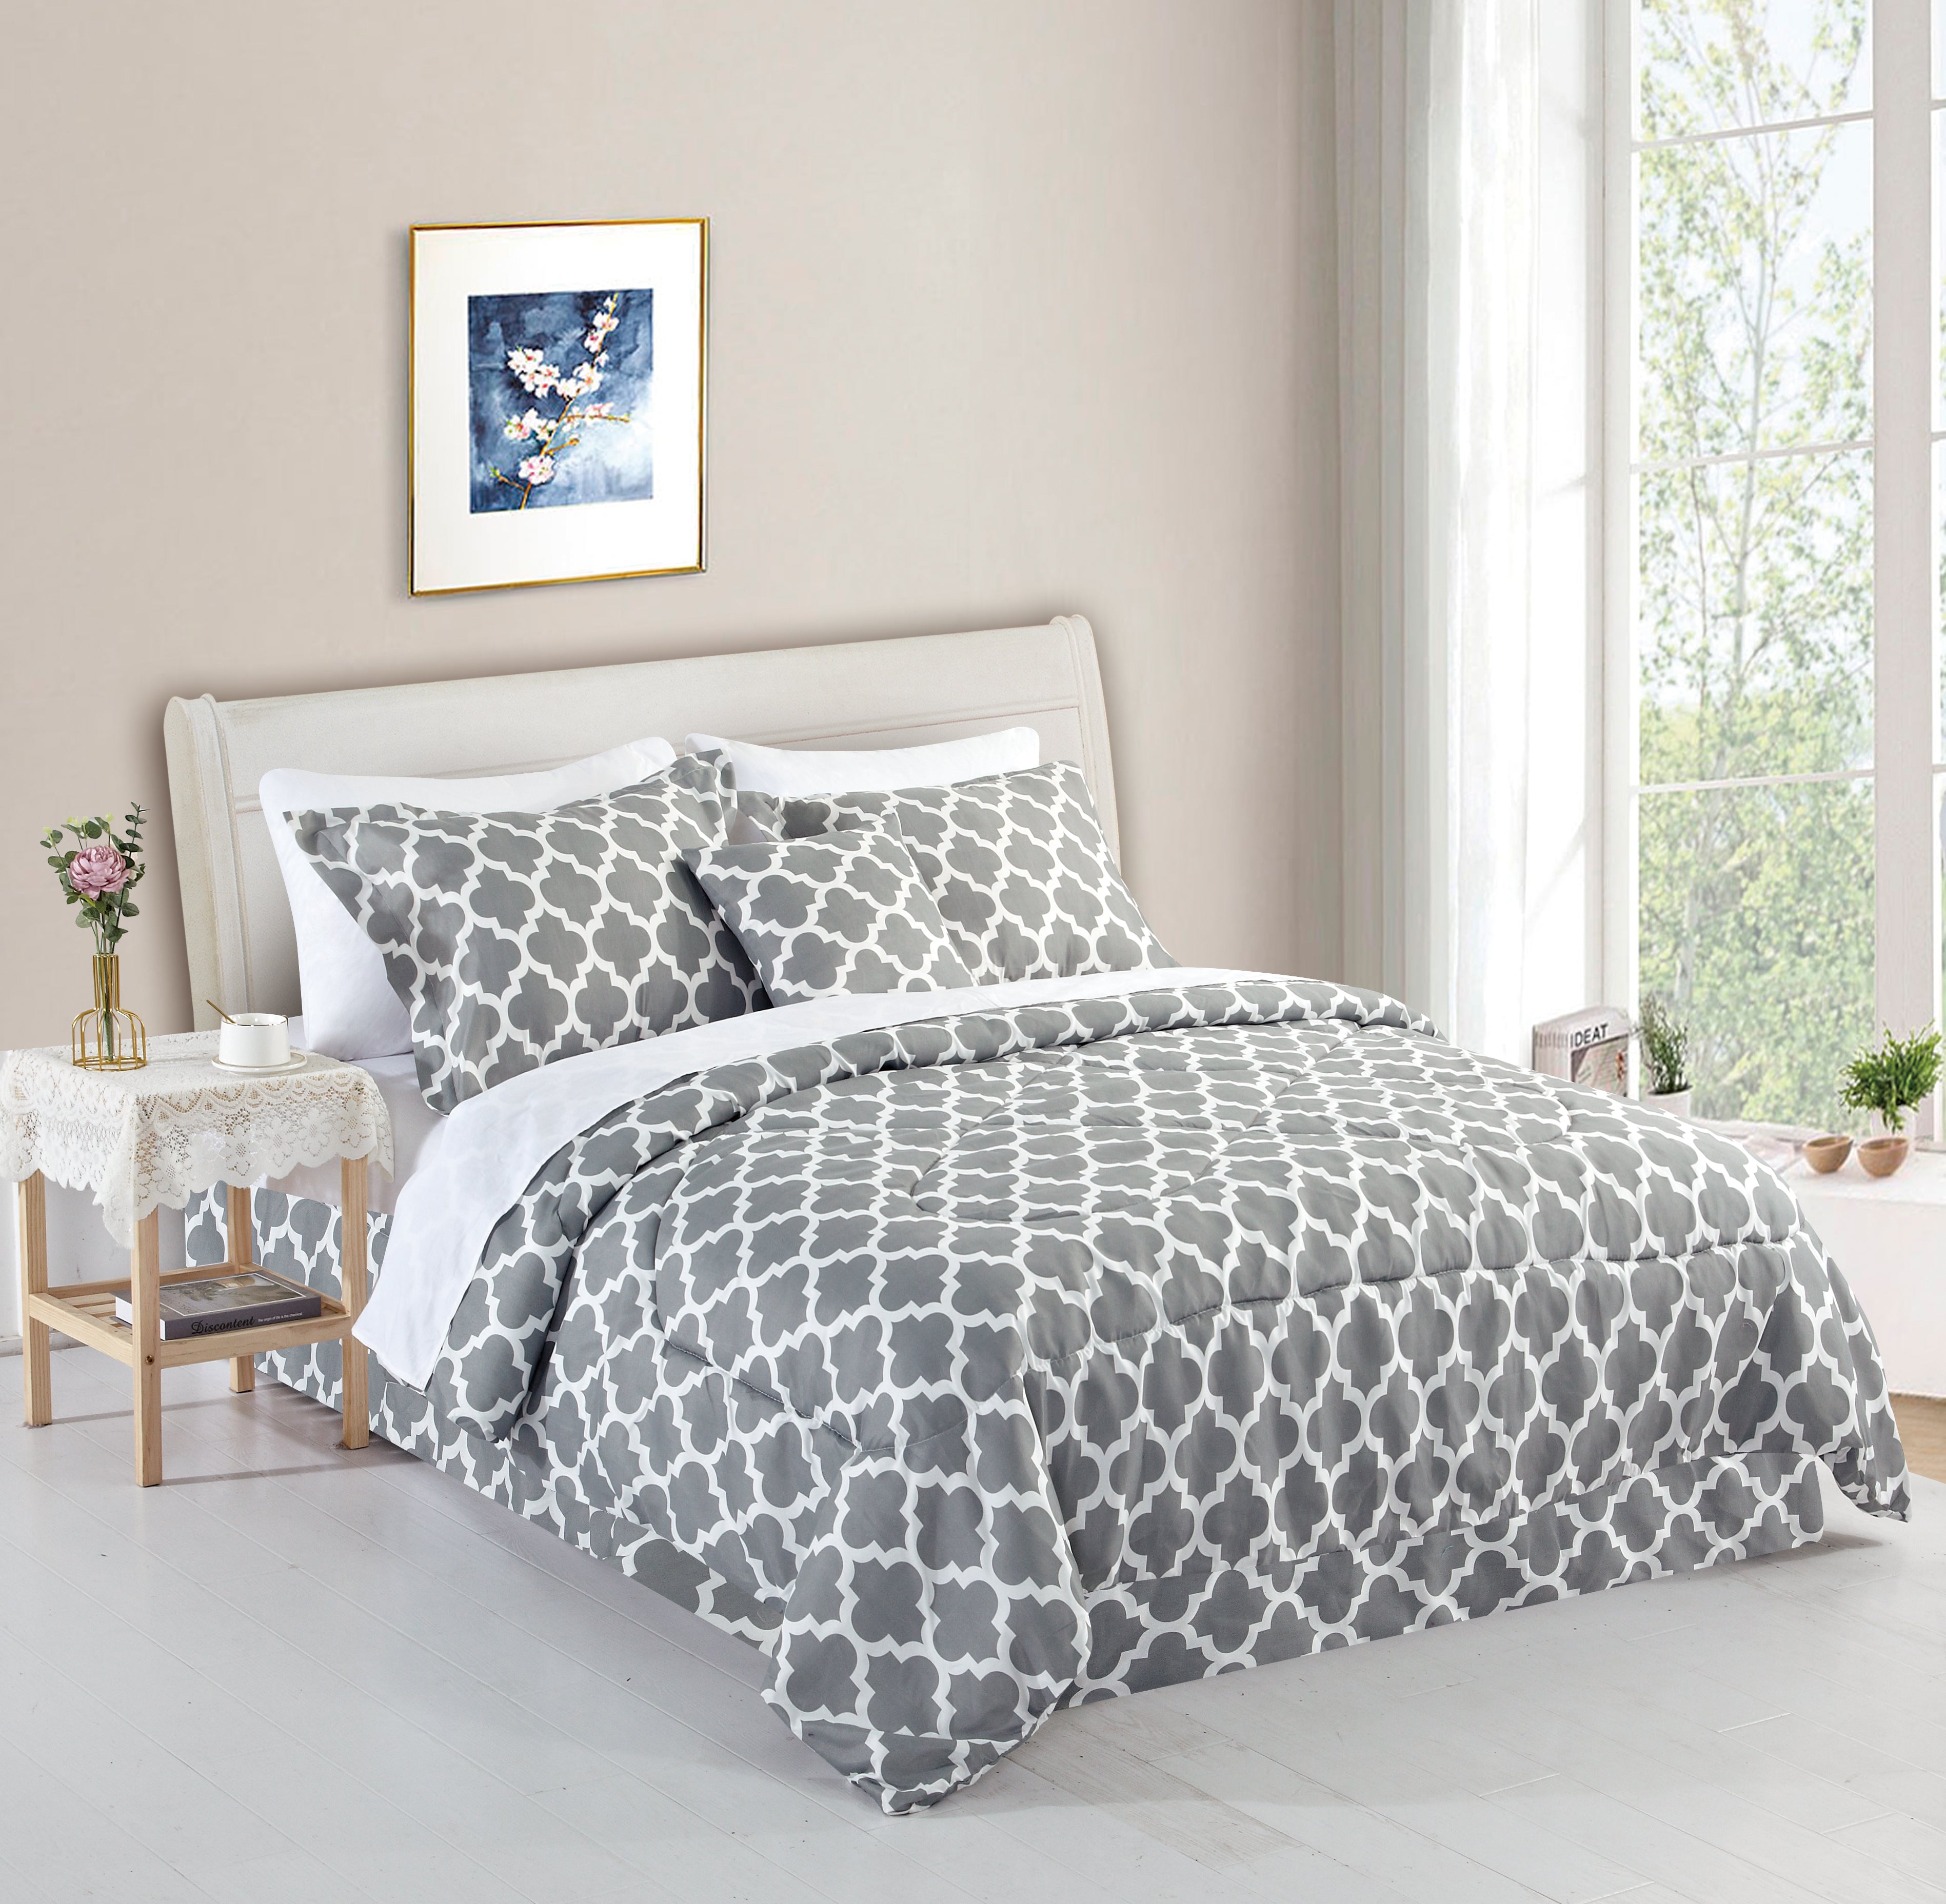 Bibb Home 5 Piece Comforter Set with Decorative Pillows